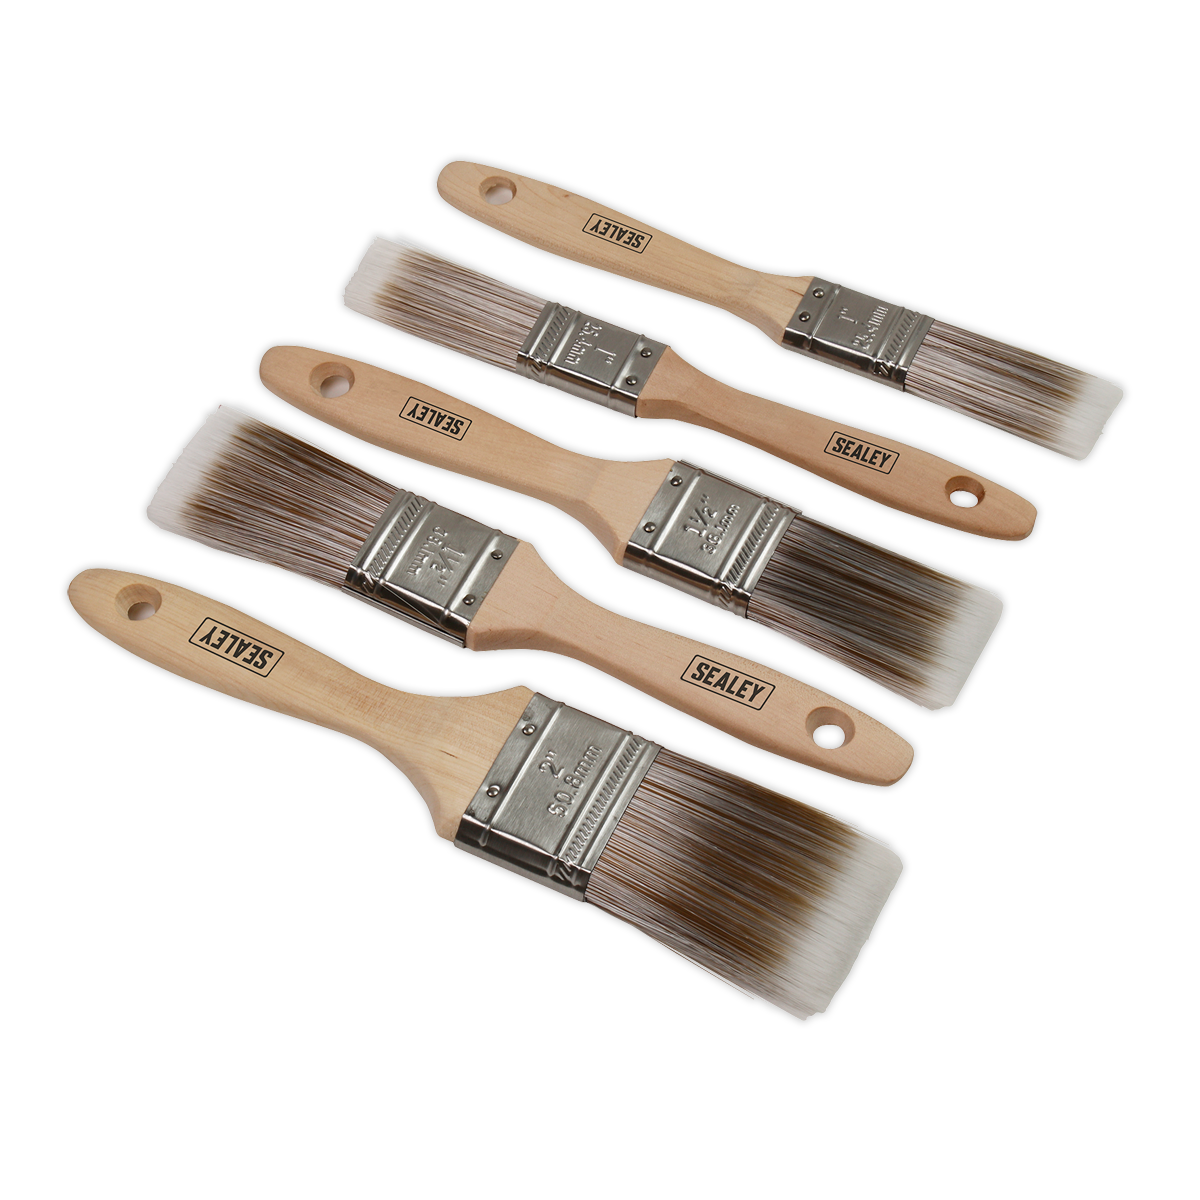 Sealey Wooden Handle Paint Brush Set 5pc